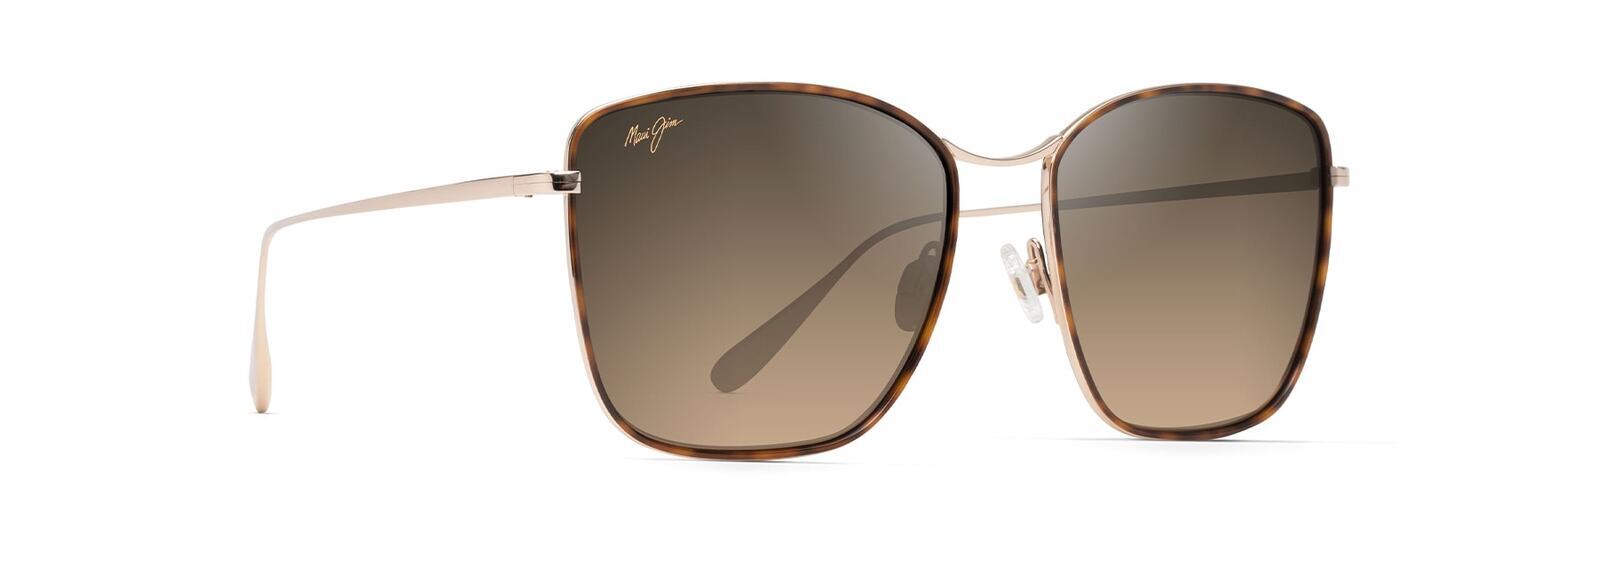 BeOne sunglasses – Slim Shadies Celebrity Sunglasses